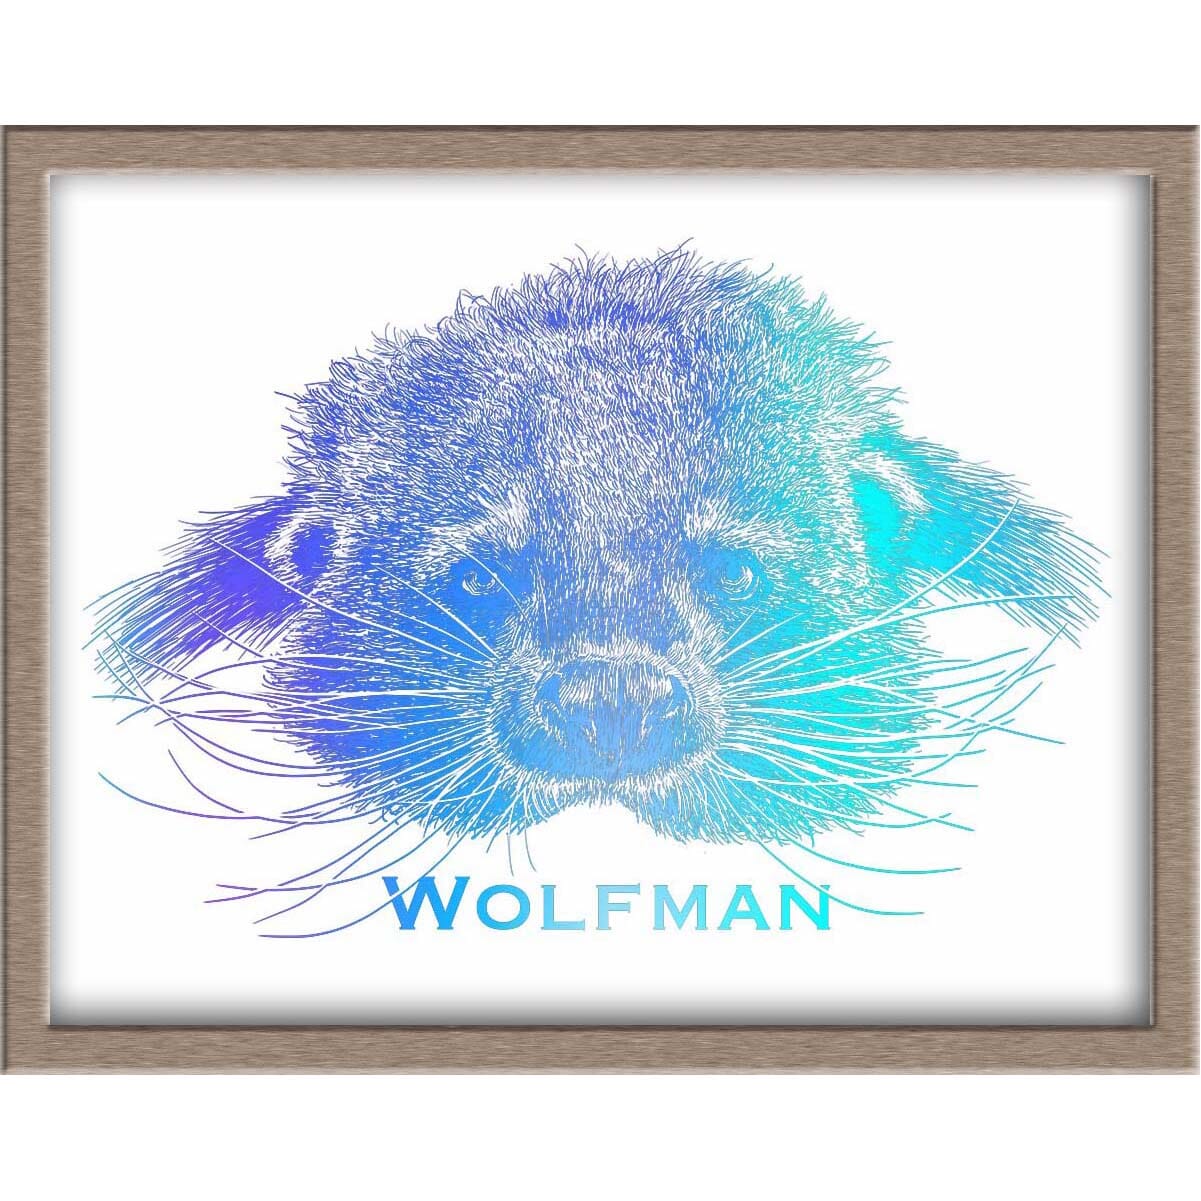 Wolfman the Binturong Foiled Print | Donation to wildlife sanctuary Wild Wonders Posters, Prints, & Visual Artwork JoyousJoyfulJoyness 